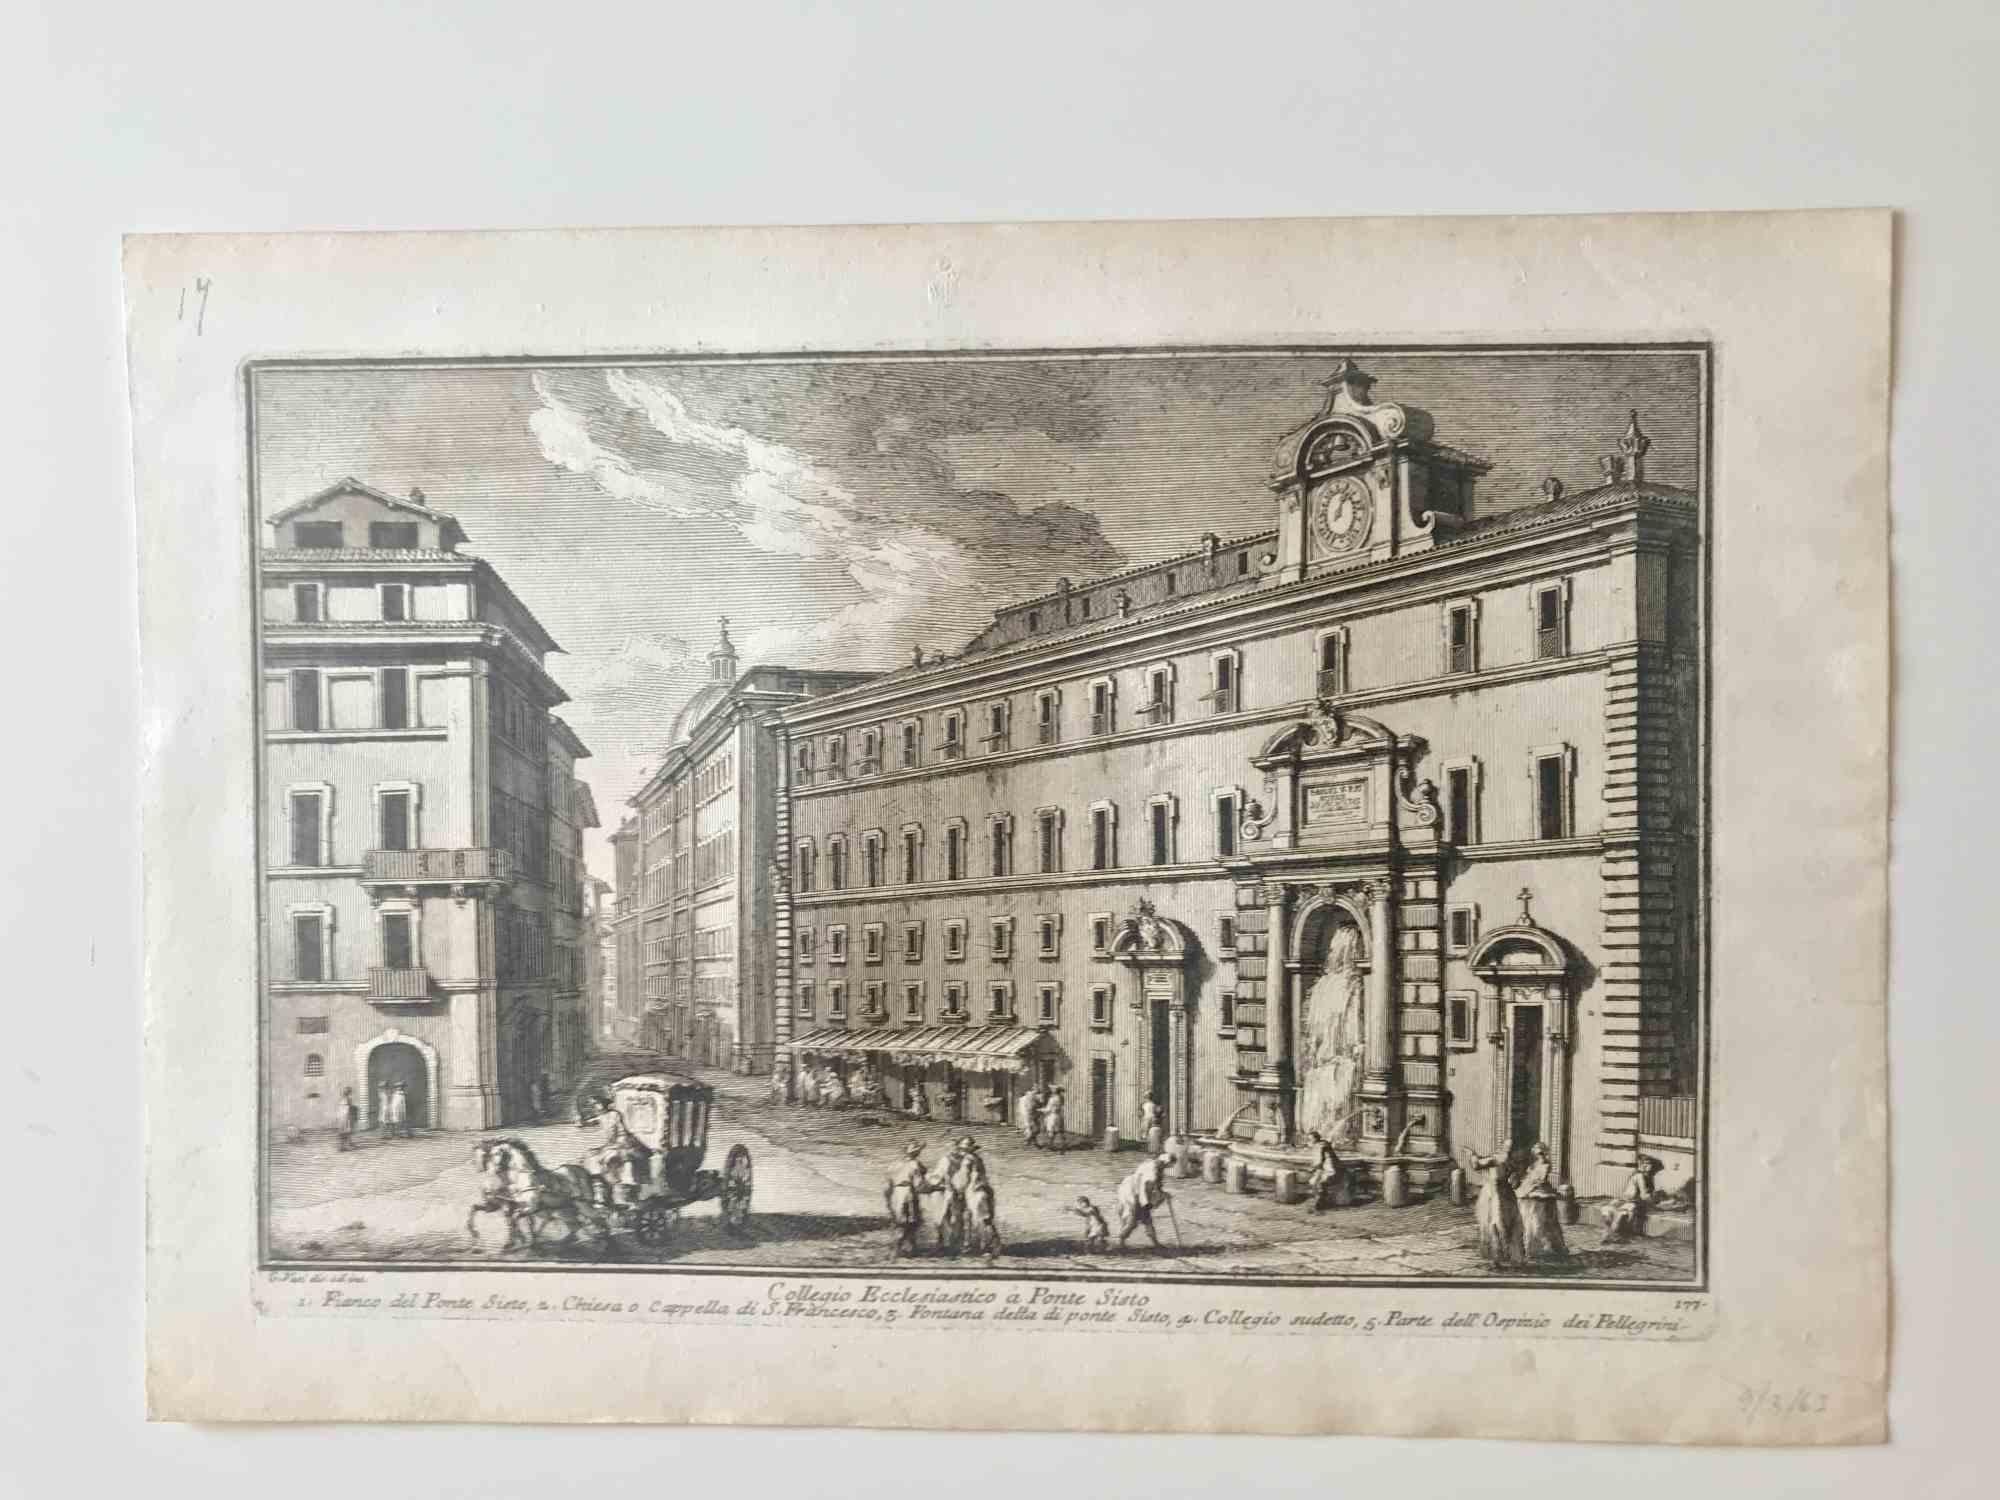 Giuseppe Vasi Figurative Print - Colleggio Ecclesiastico a Ponte Sisto - Etching by G. Vasi - Late 18th century